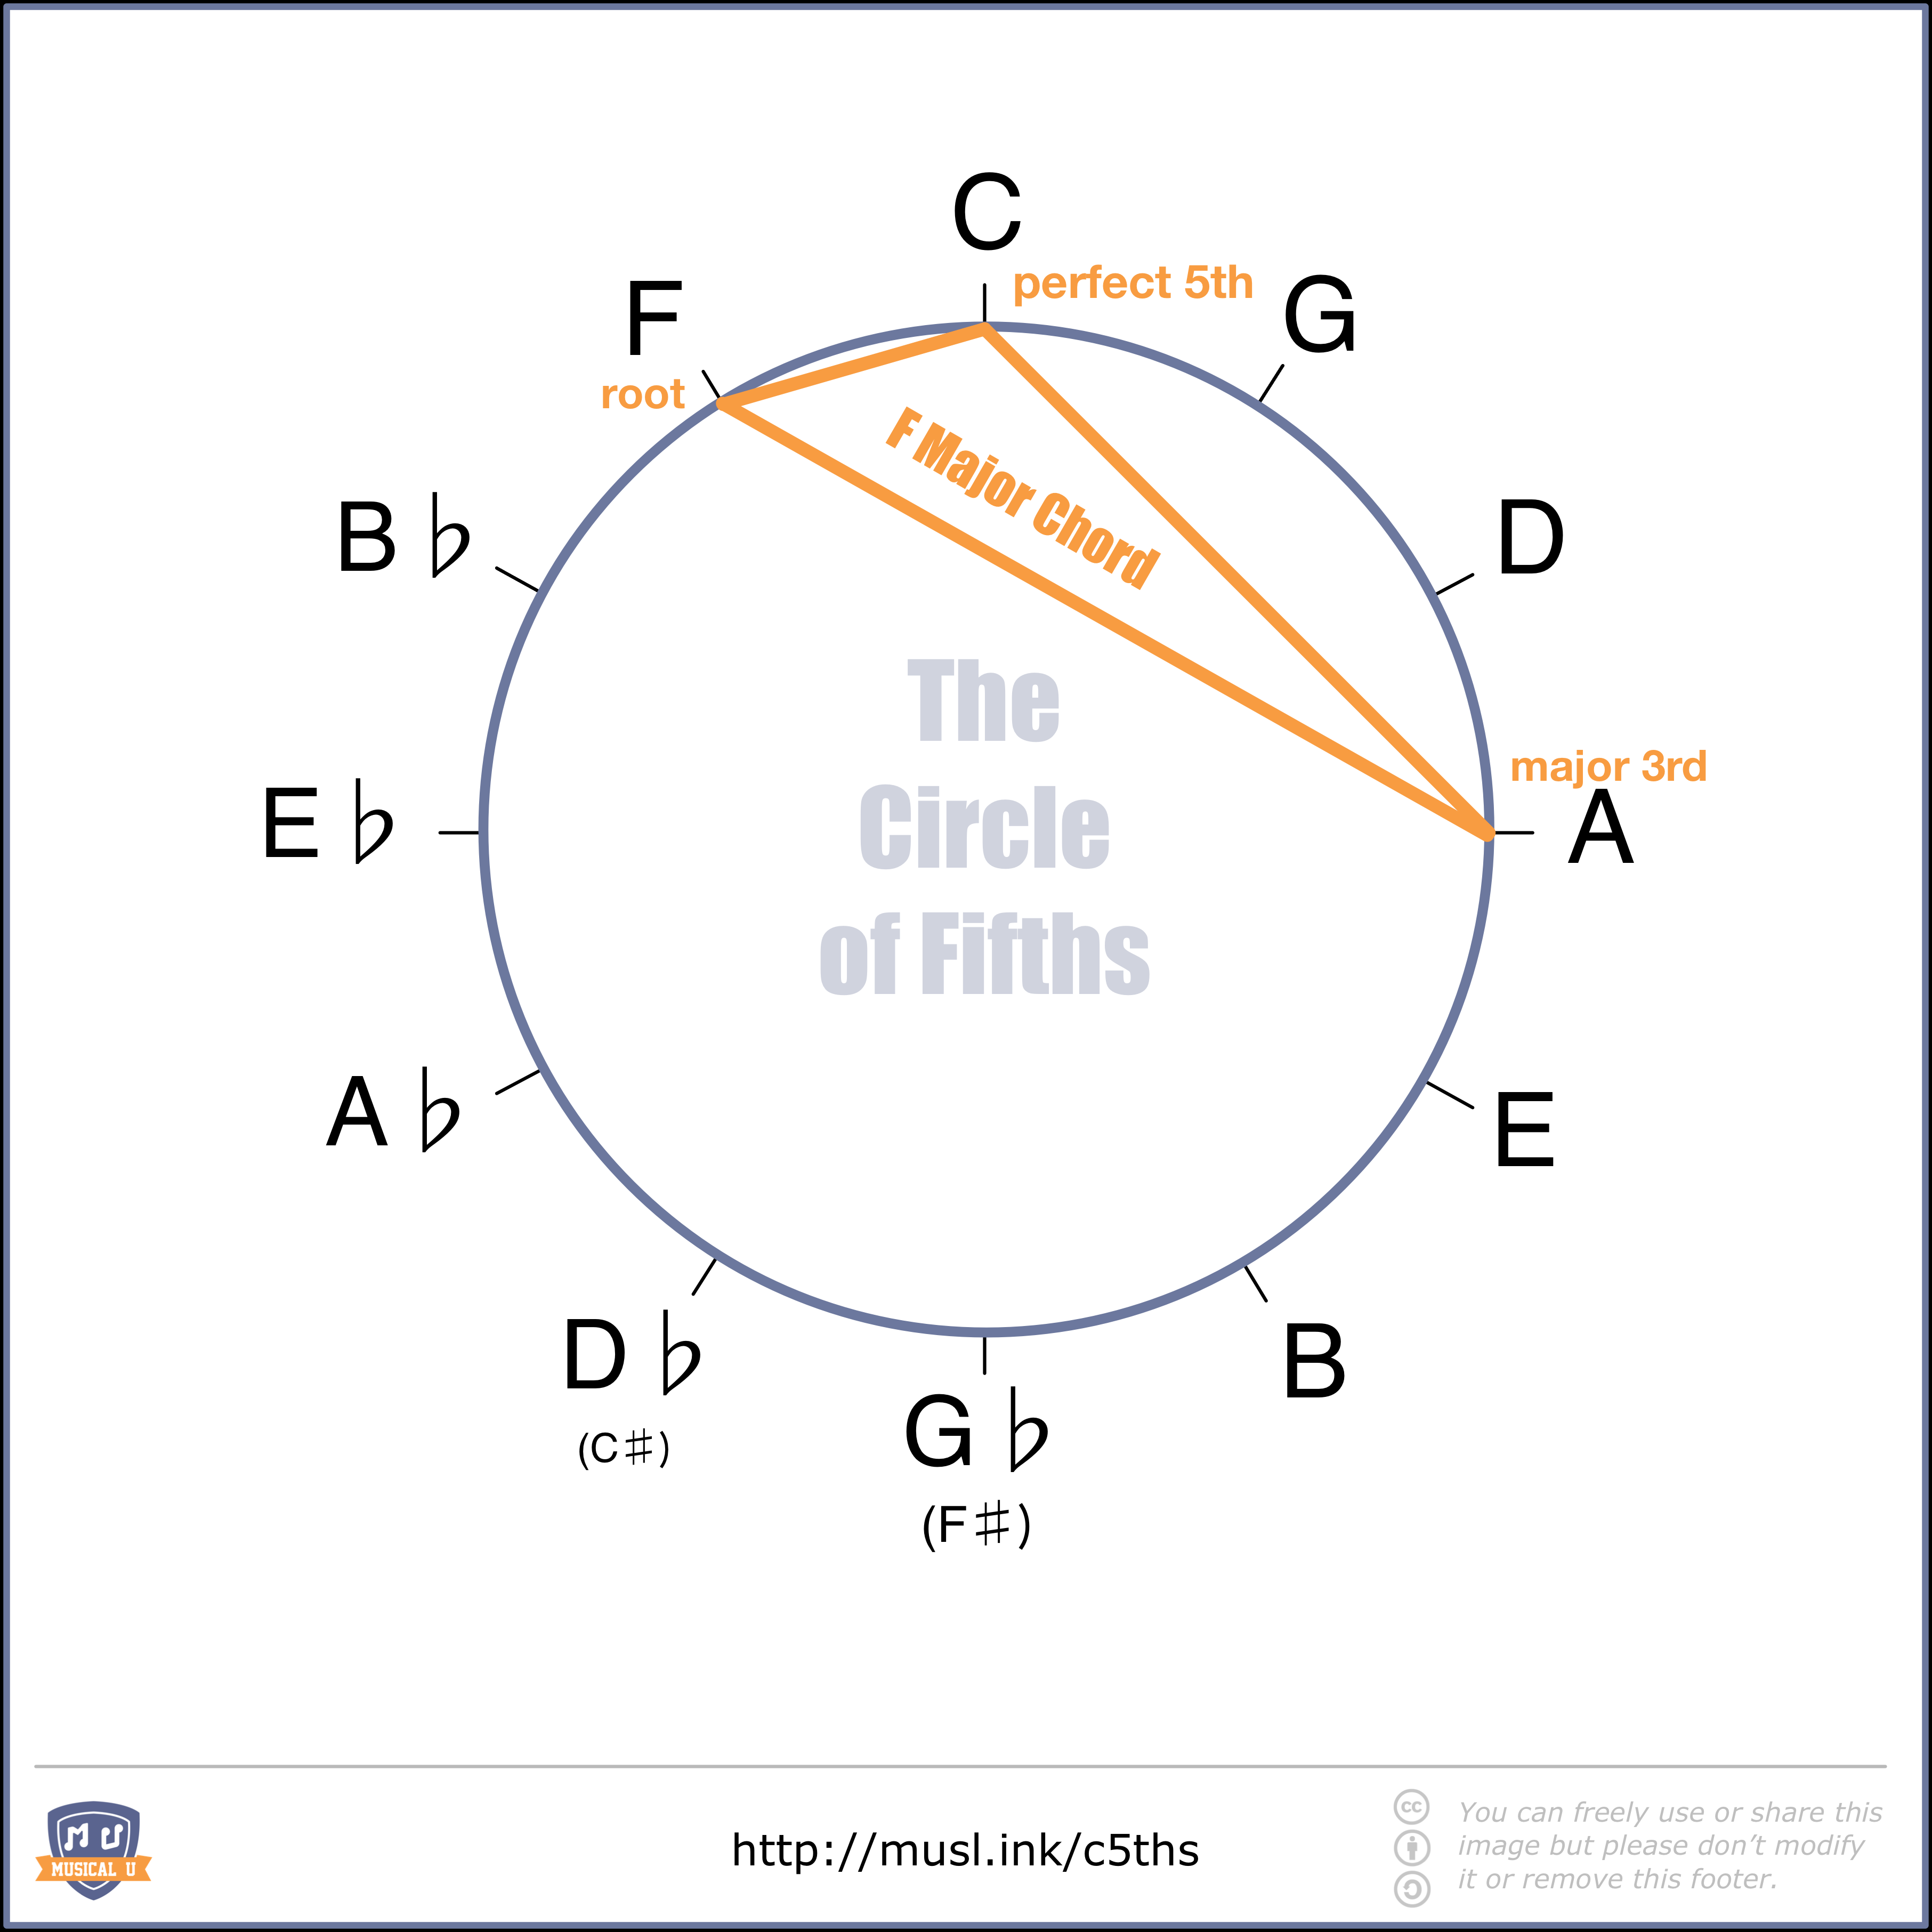 F major chord shown in a circle